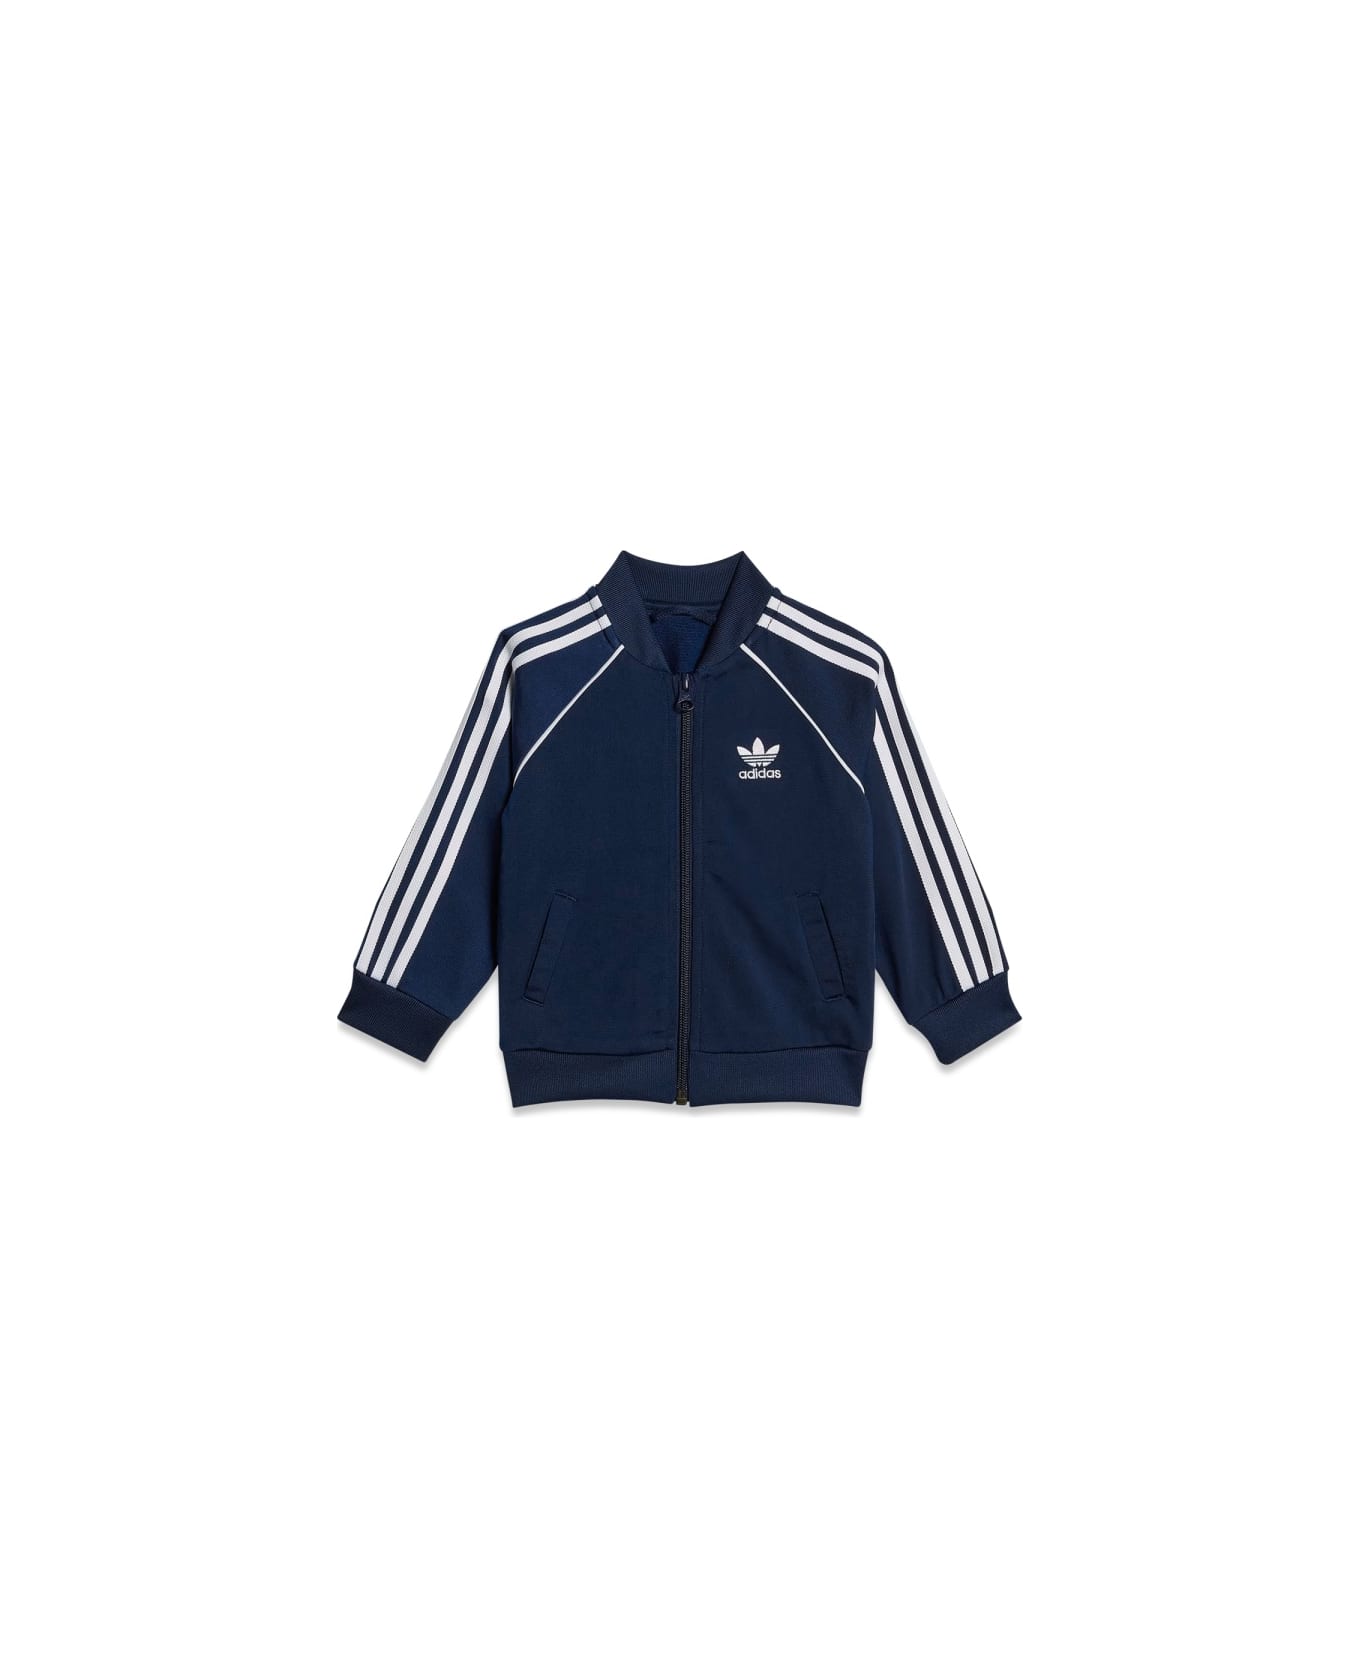 Adidas Originals Sst Tracksuit - BLUE